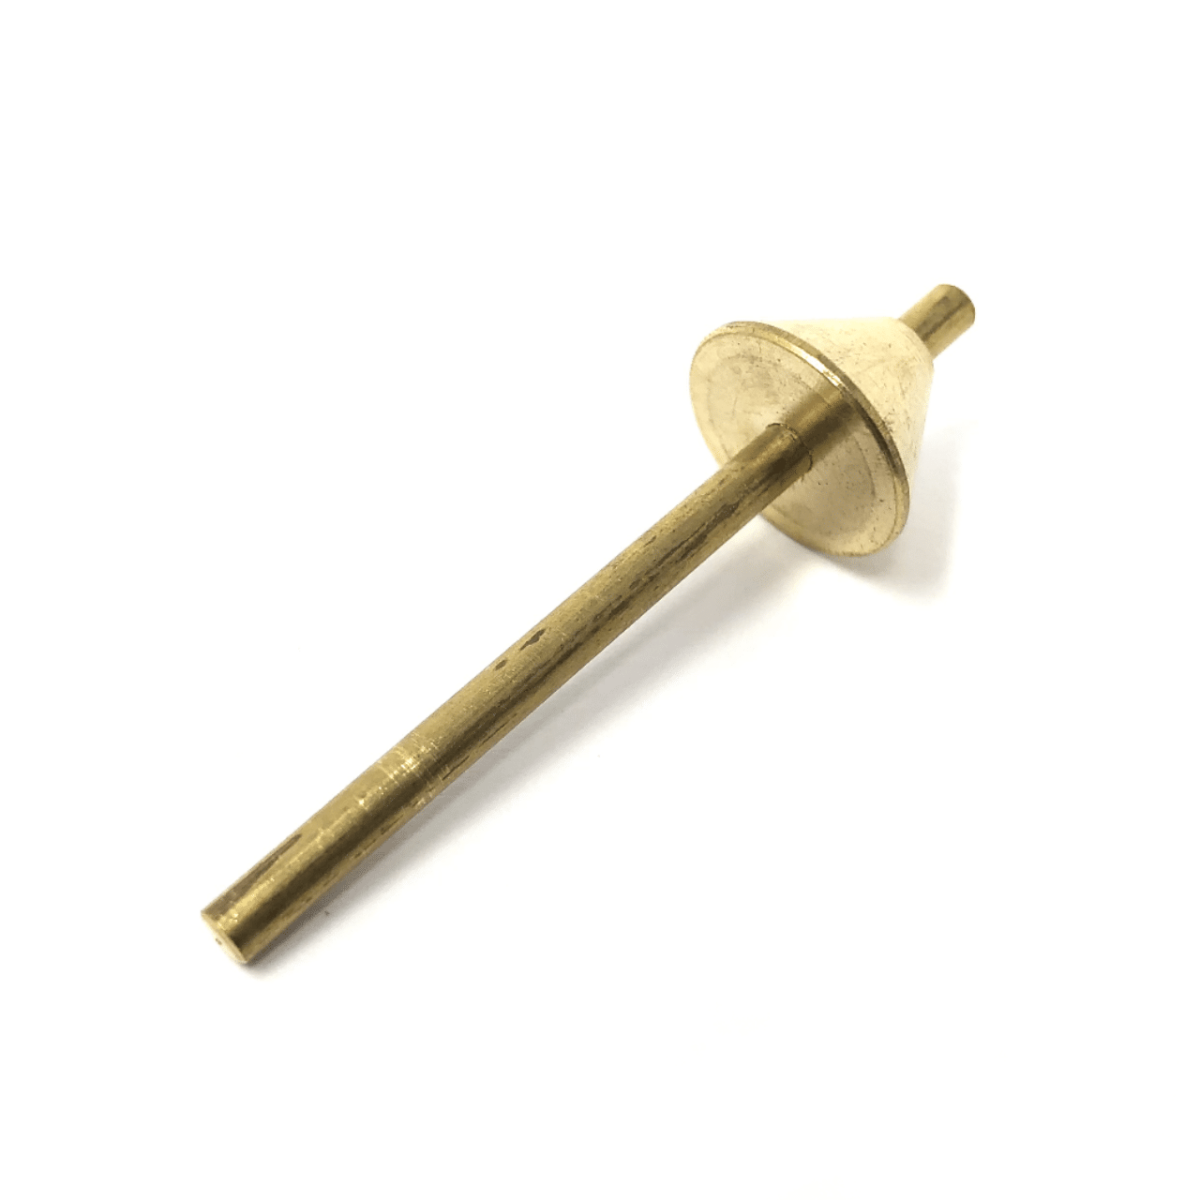 Brass Sprue Forming Mandrel Tool Sand Casting Wax Jewellery Making 194556588985 2 - Maddisons UK